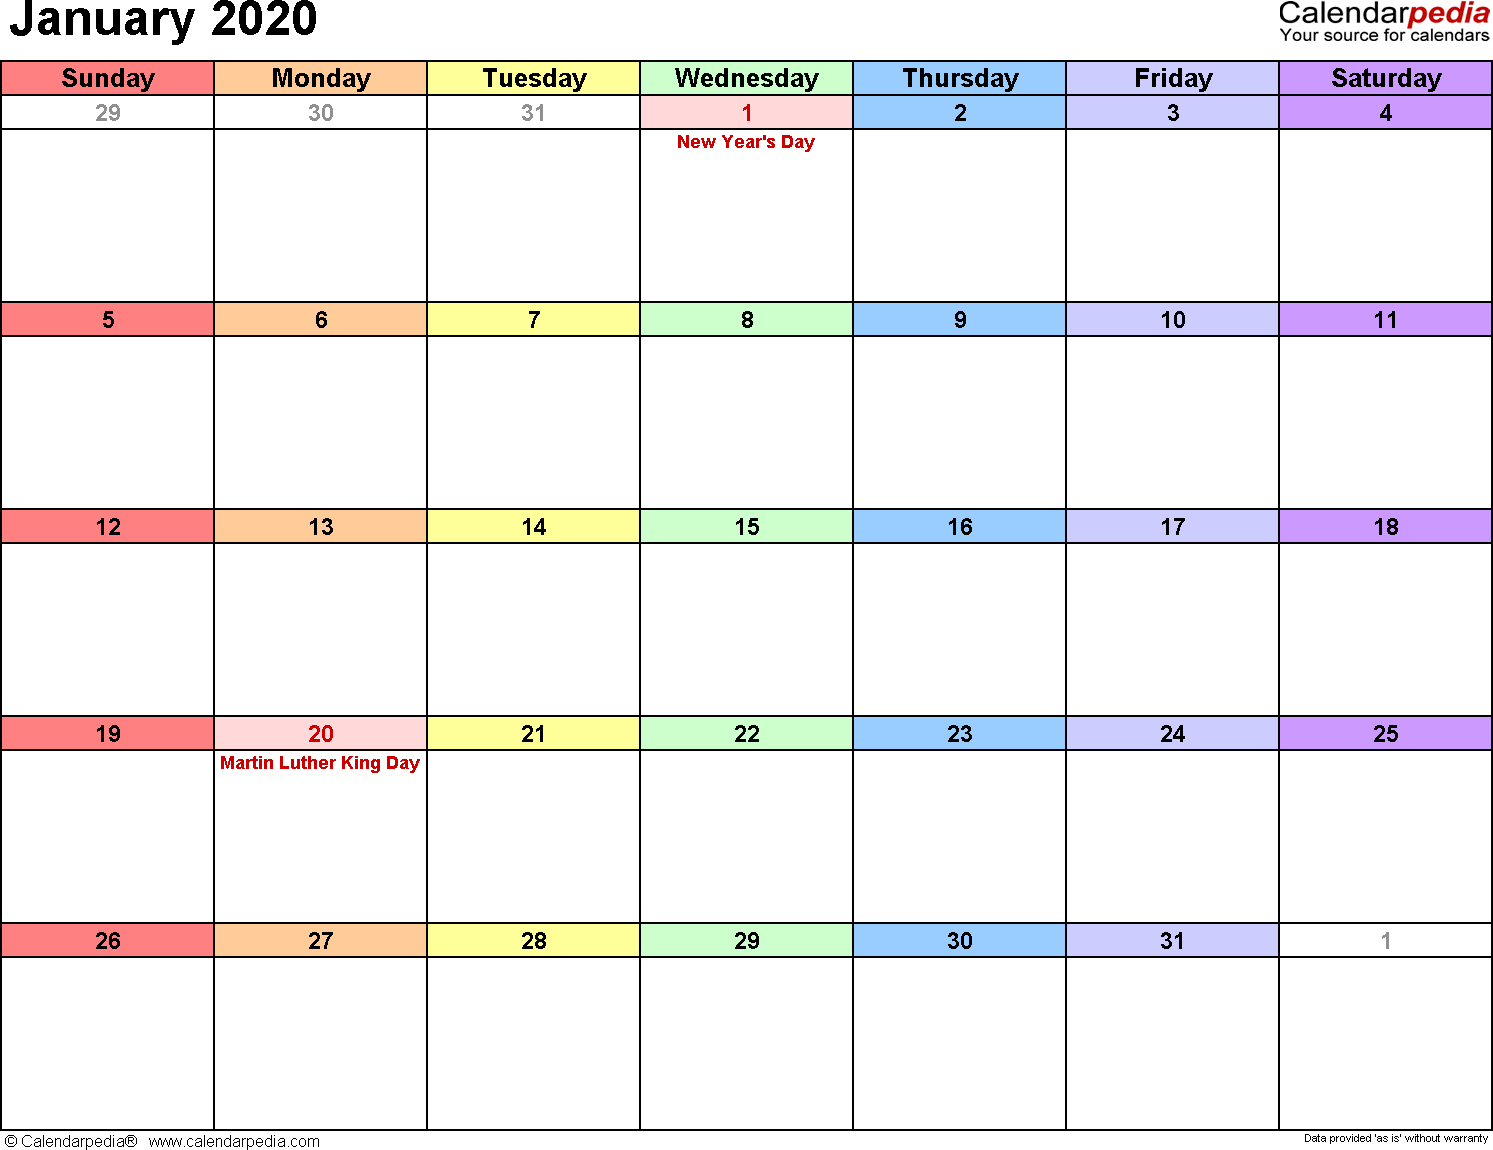 January 2020 Calendar Wallpapers - Wallpaper Cave Calendar Showing December 2020 And January 2021